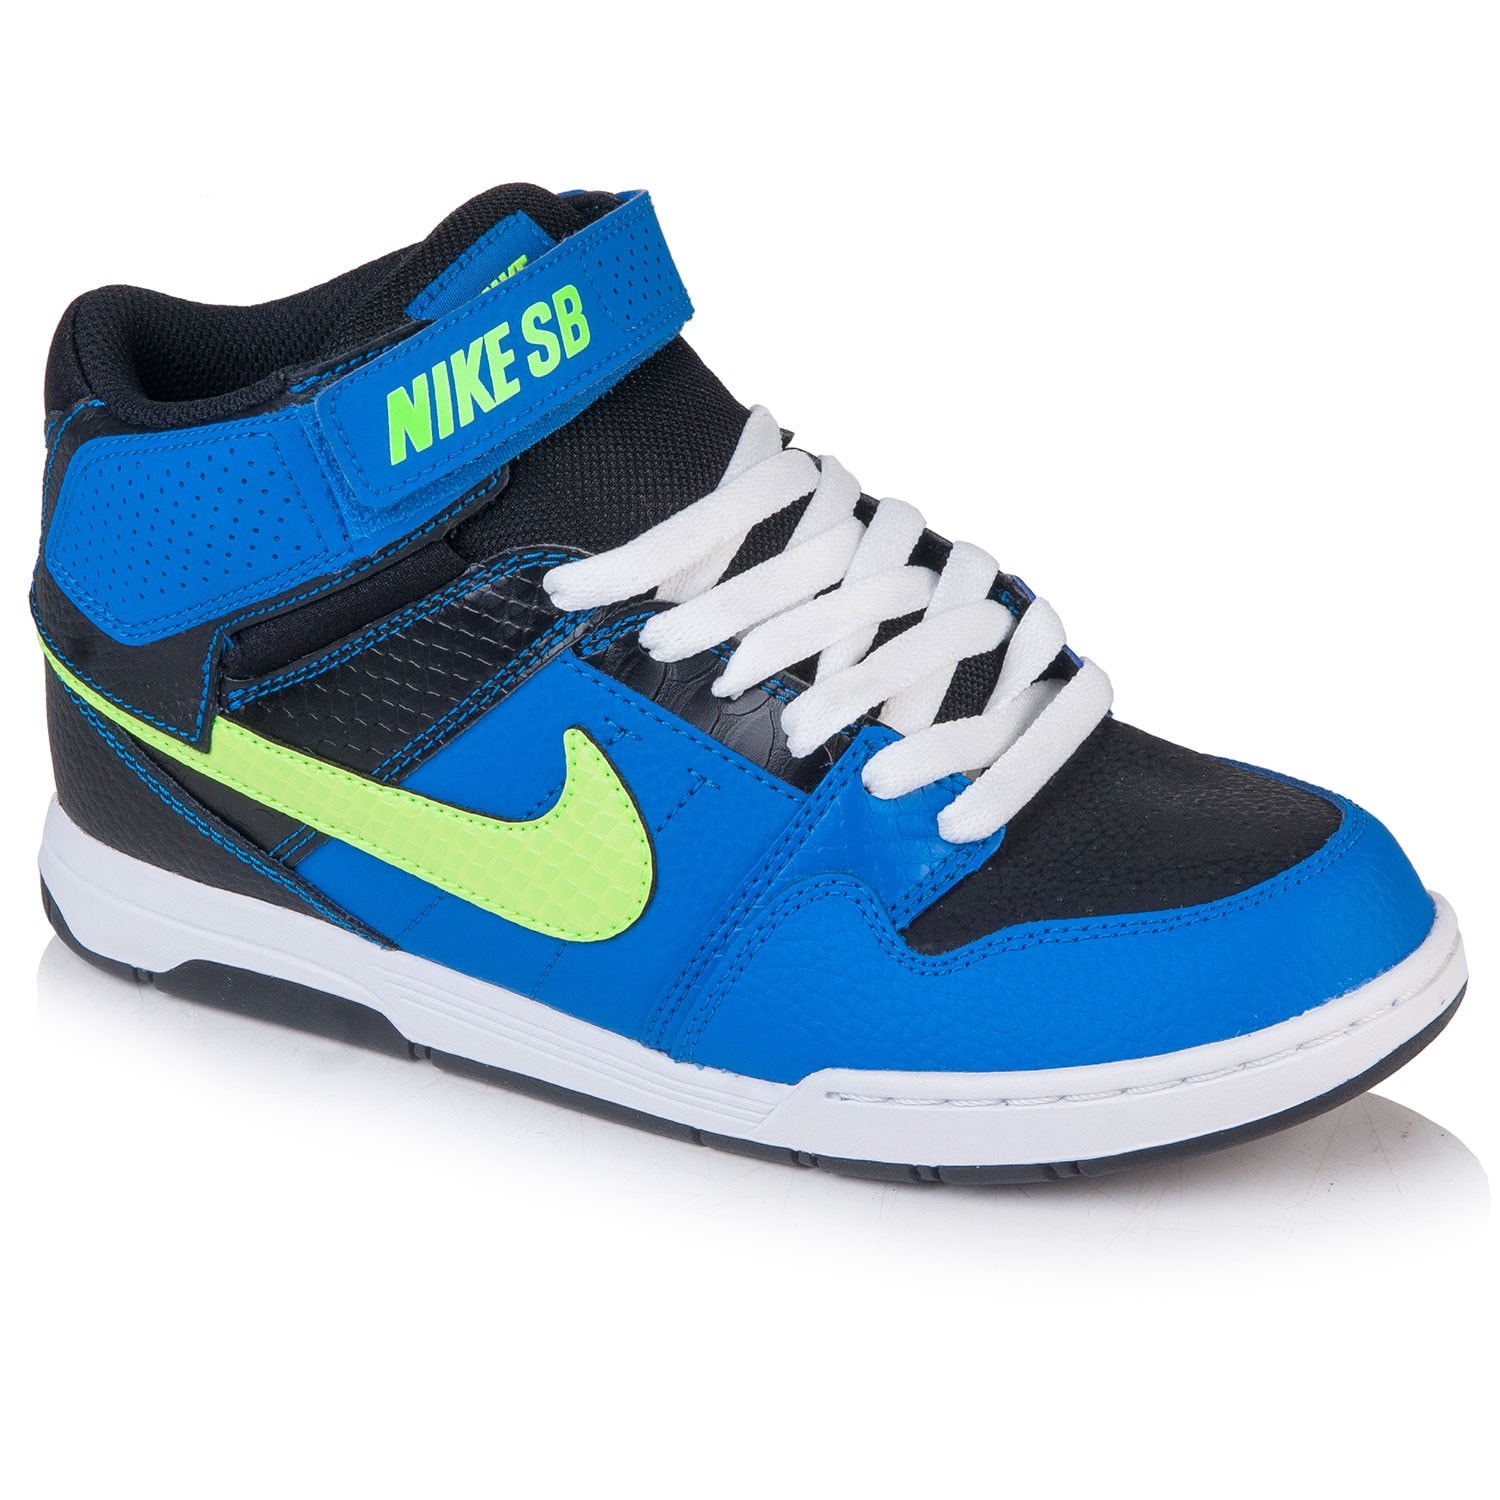 Aap deugd controller Sneakers Nike SB Mogan Mid 2 Jr B photo blue/volt-black-white | Snowboard  Zezula